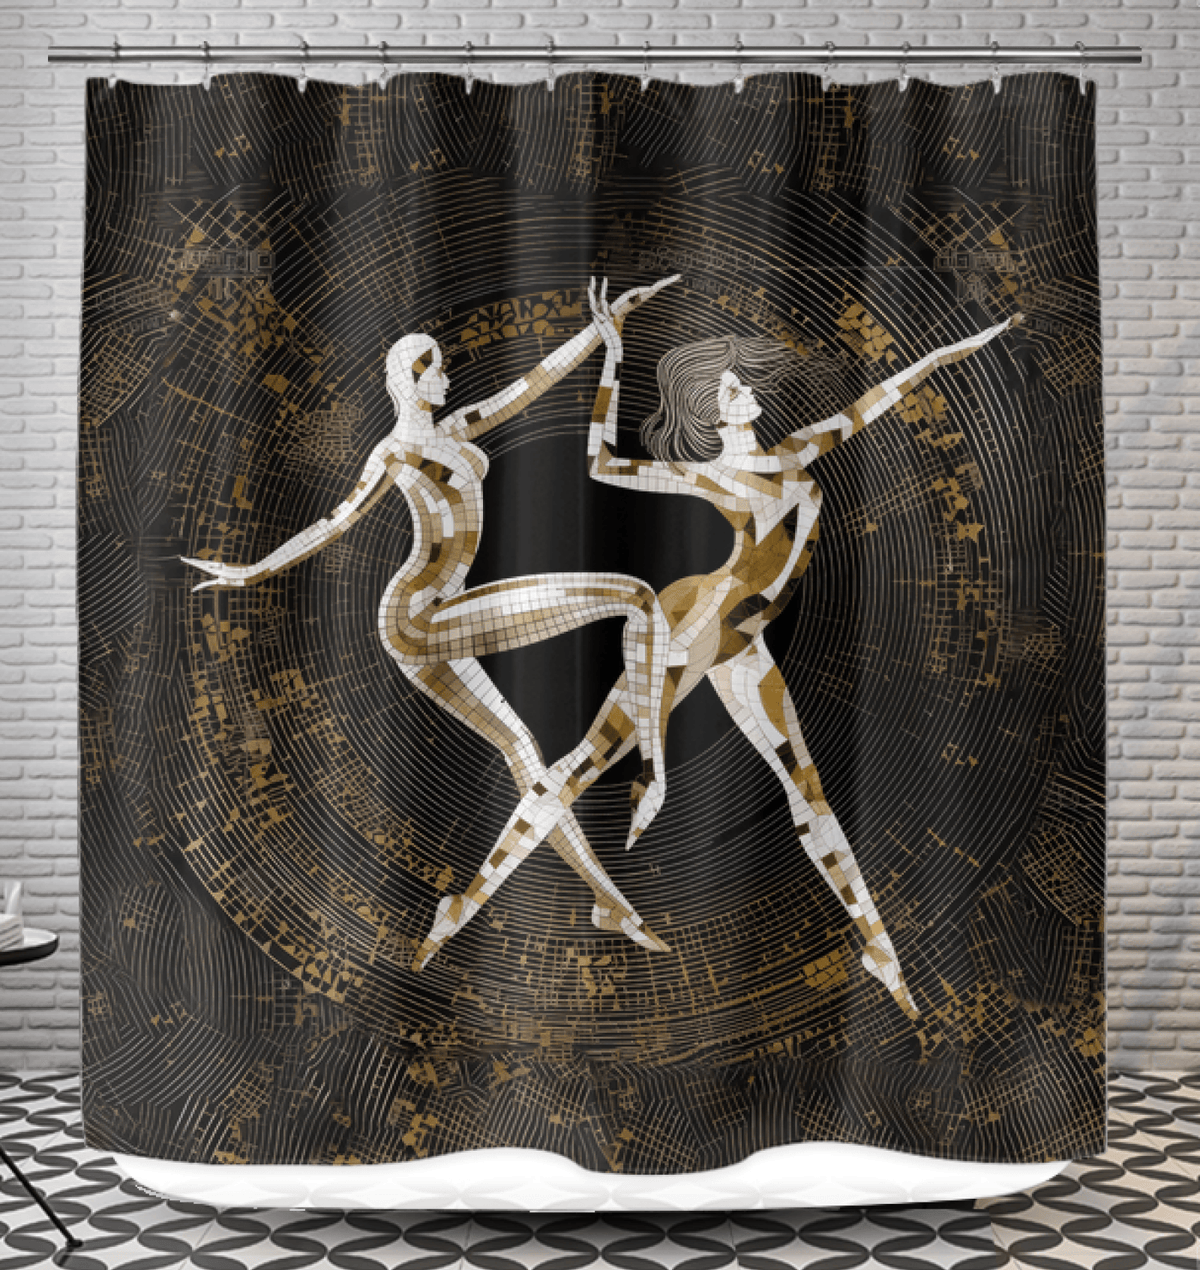 Balletic Extravaganza bath curtain showcasing elegant dance-inspired design.